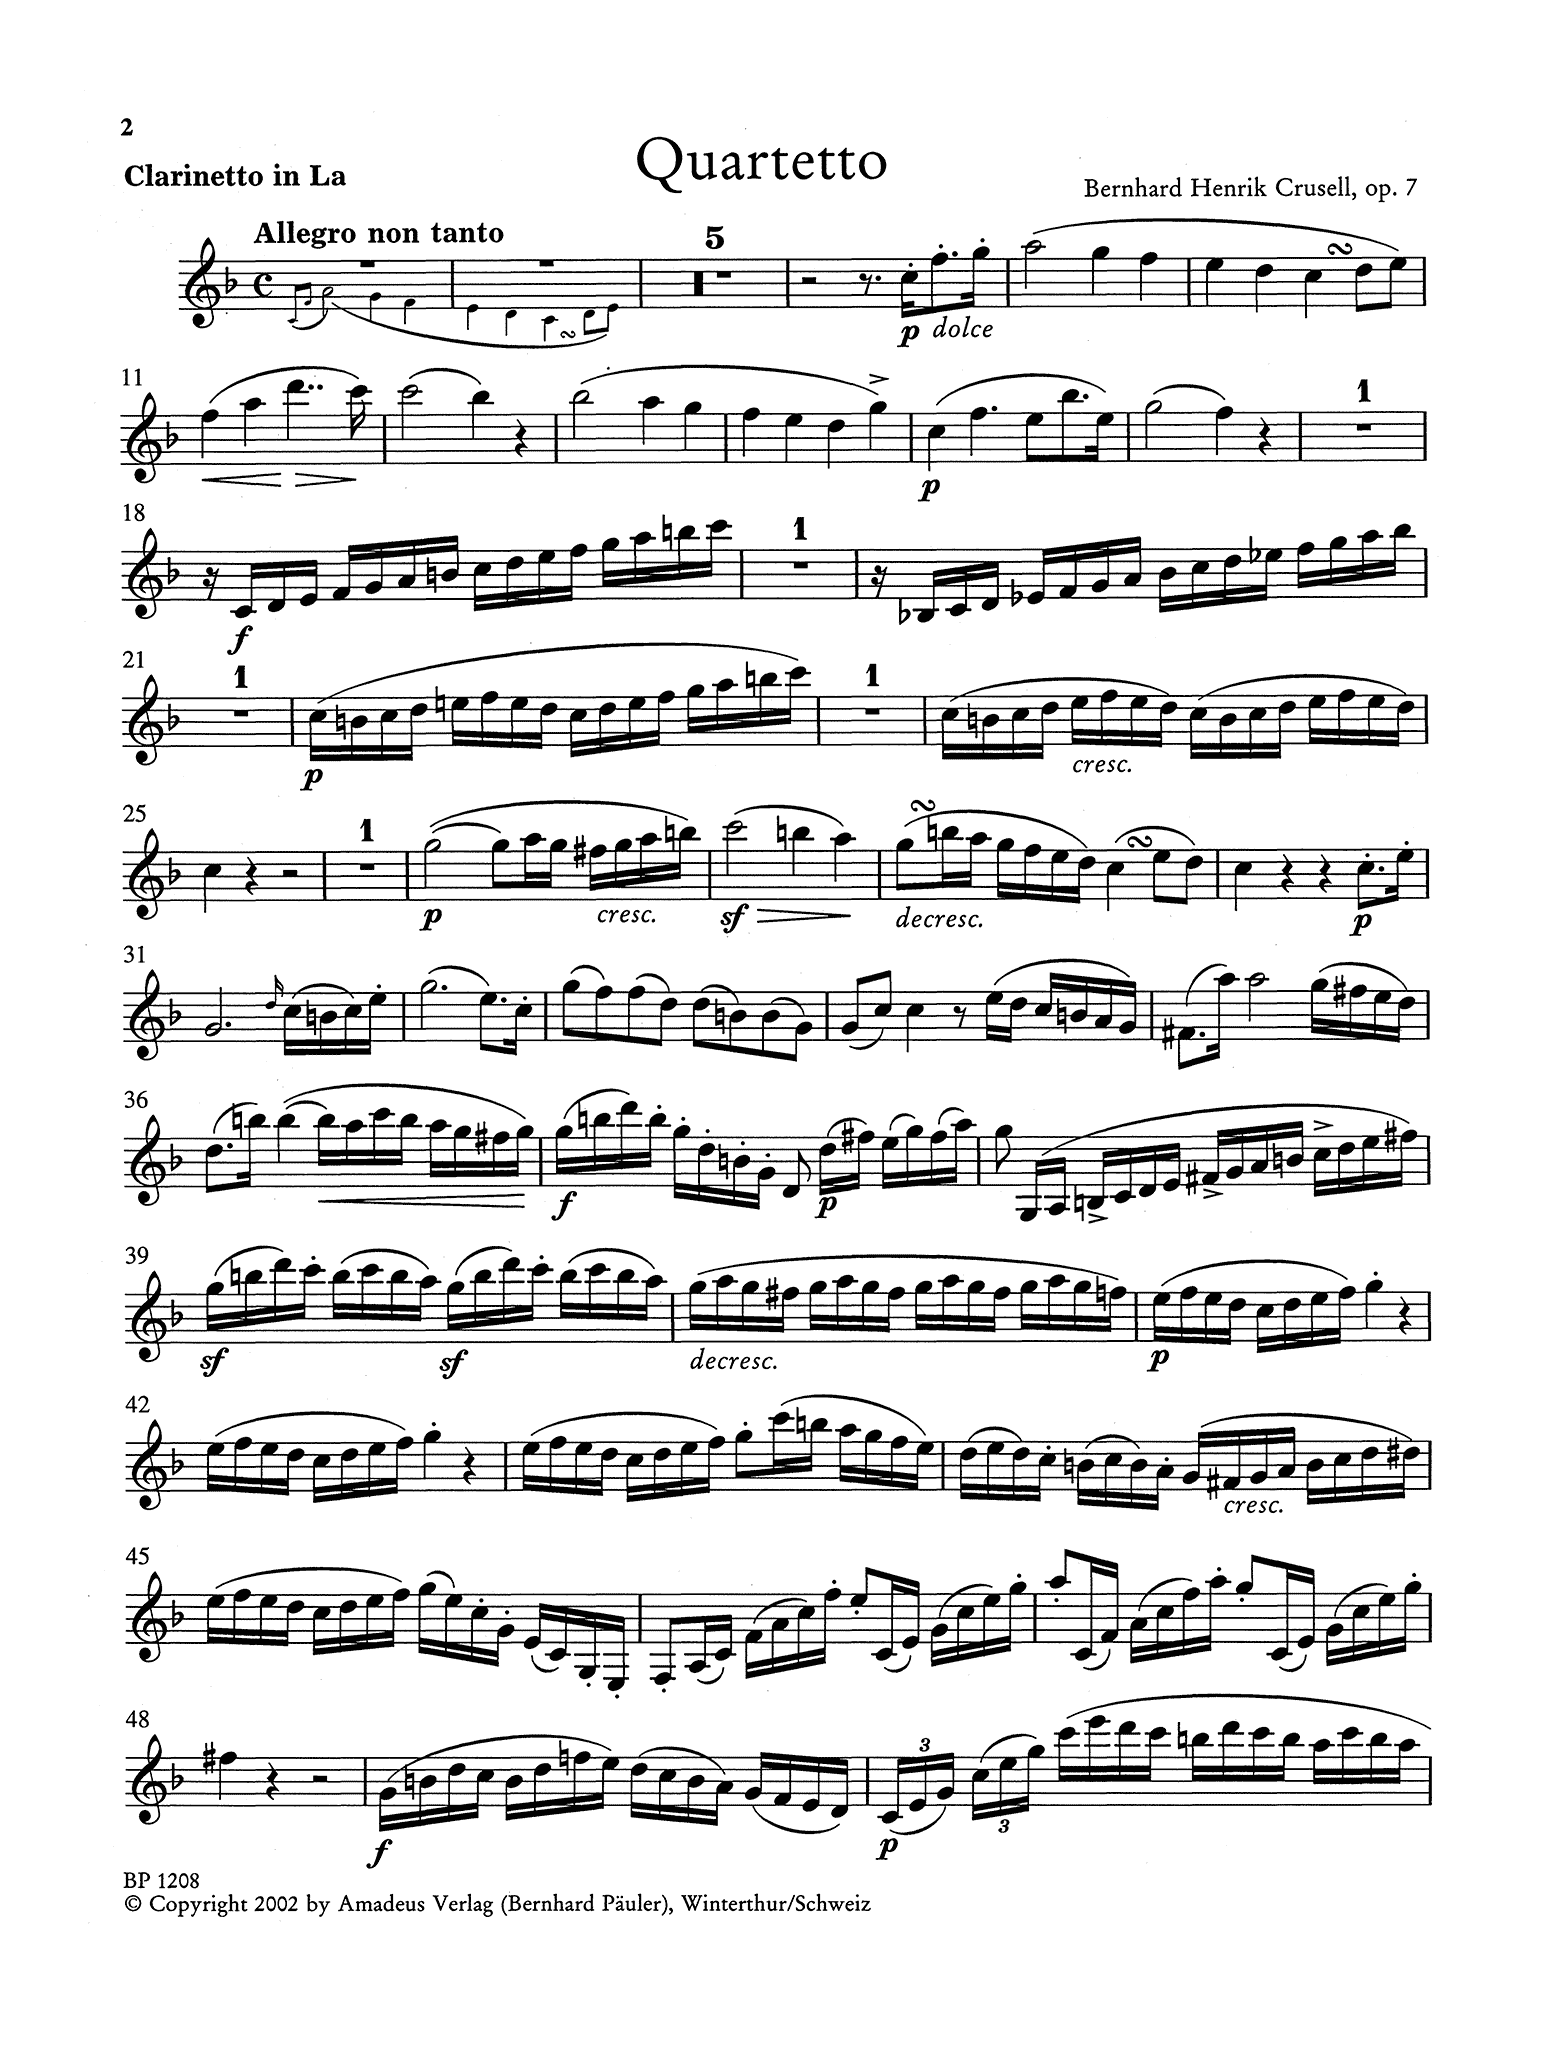 Crusell Clarinet Quartet No. 3 in D Major, Op. 7 clarinet part